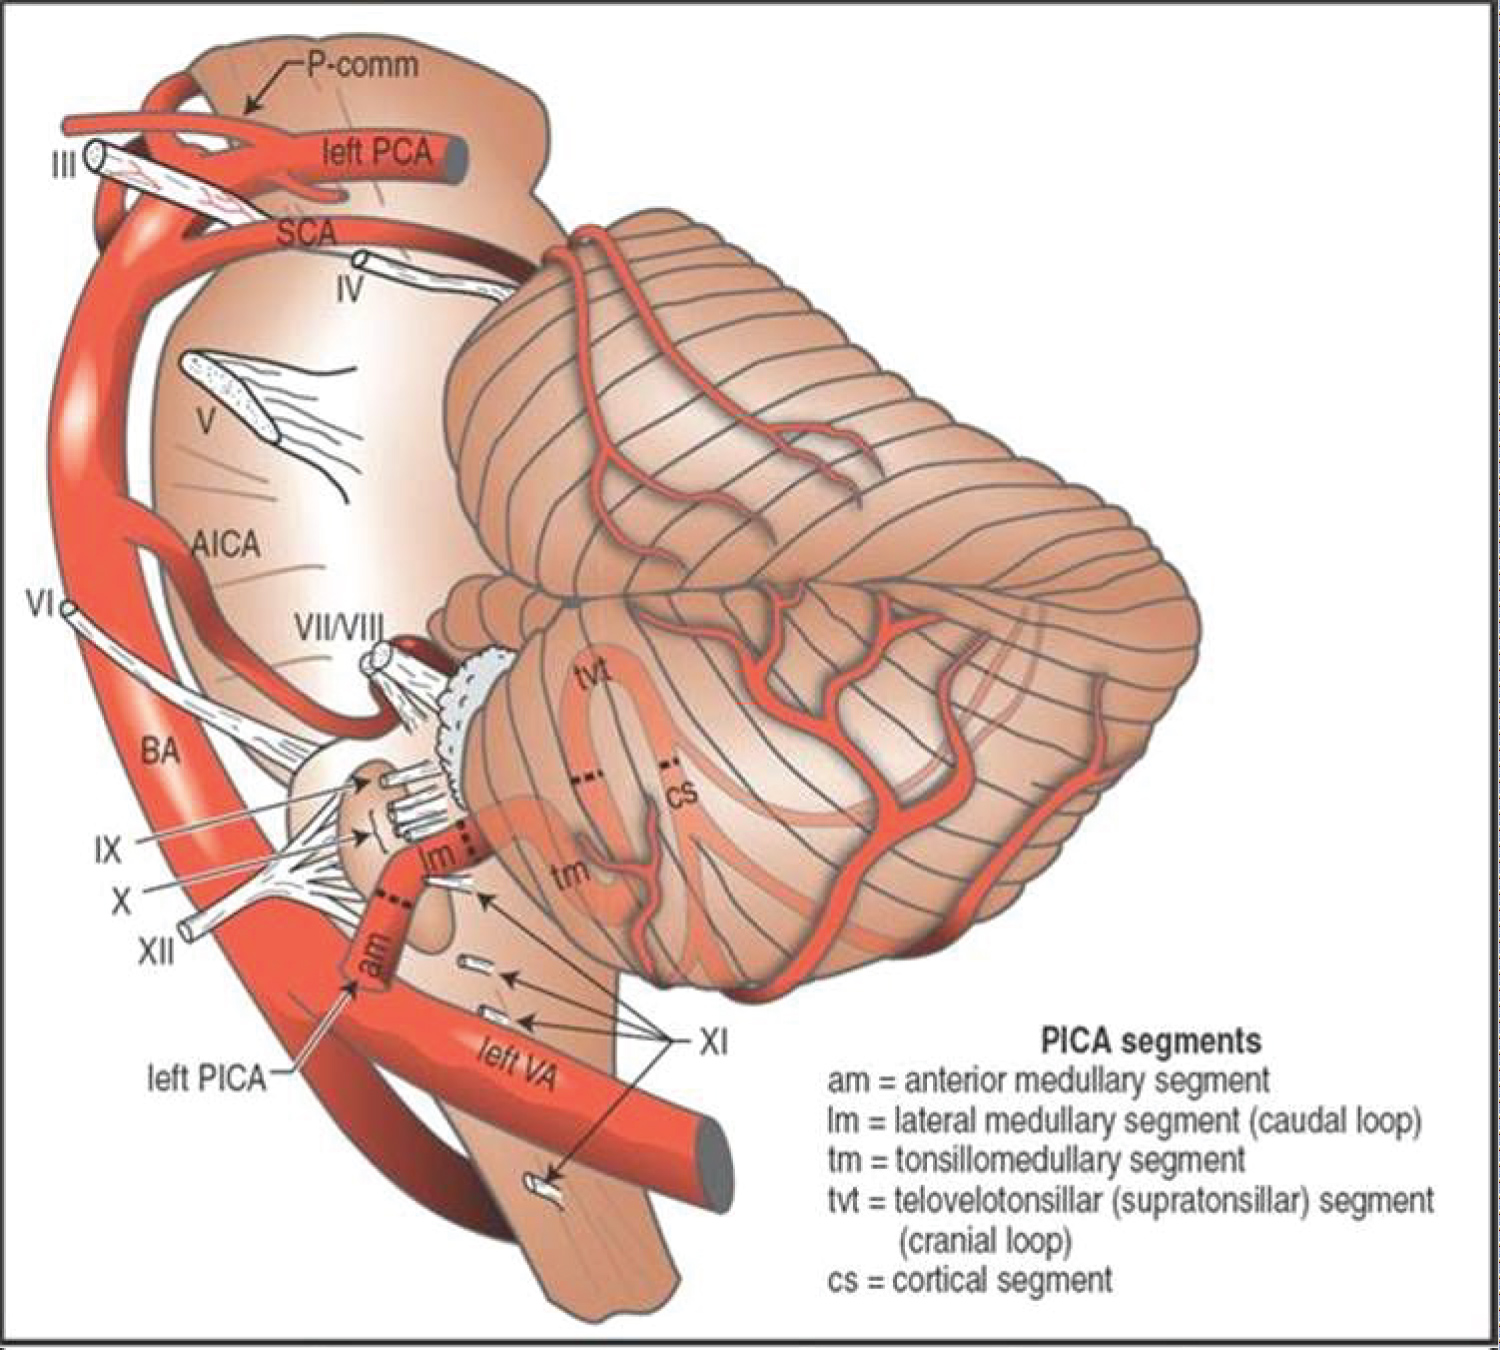 Posterior Inferior Cerebellar Artery Aneurysm